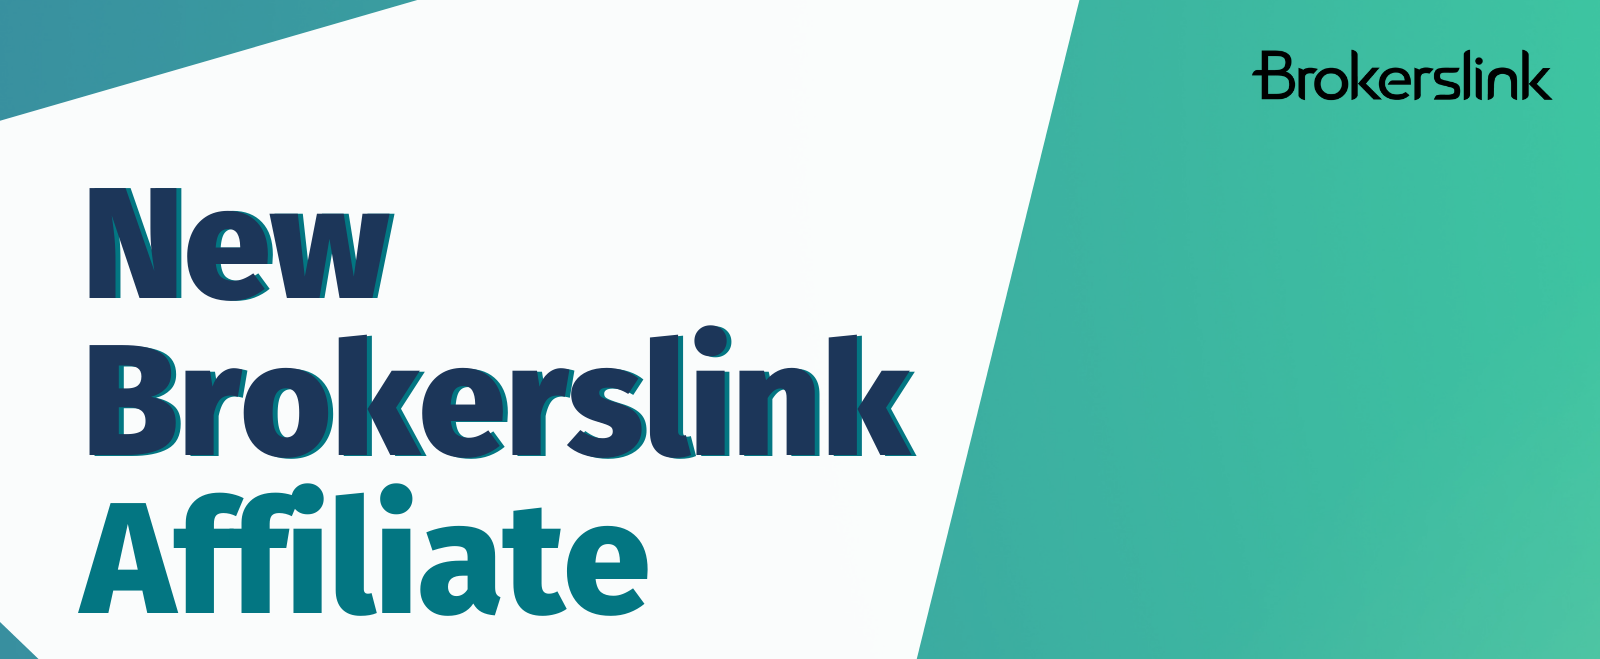 New_affiliate_brokerslink